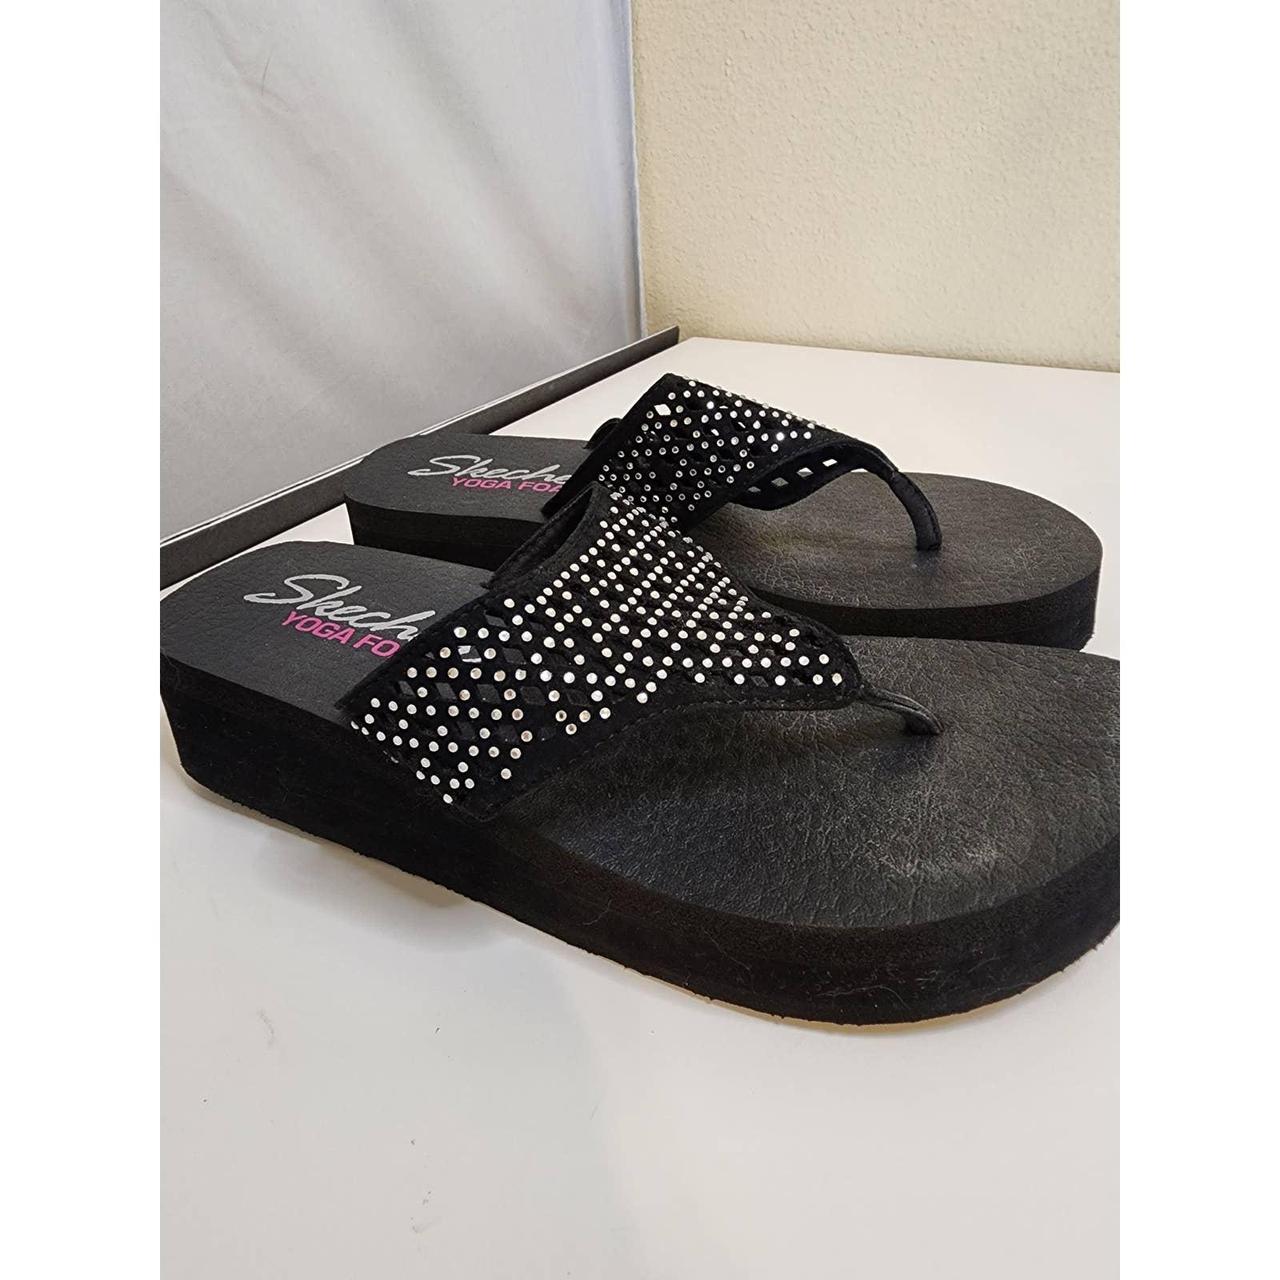 SKECHERS Yoga Foam Platform Flip Flop Sandals Size - Depop